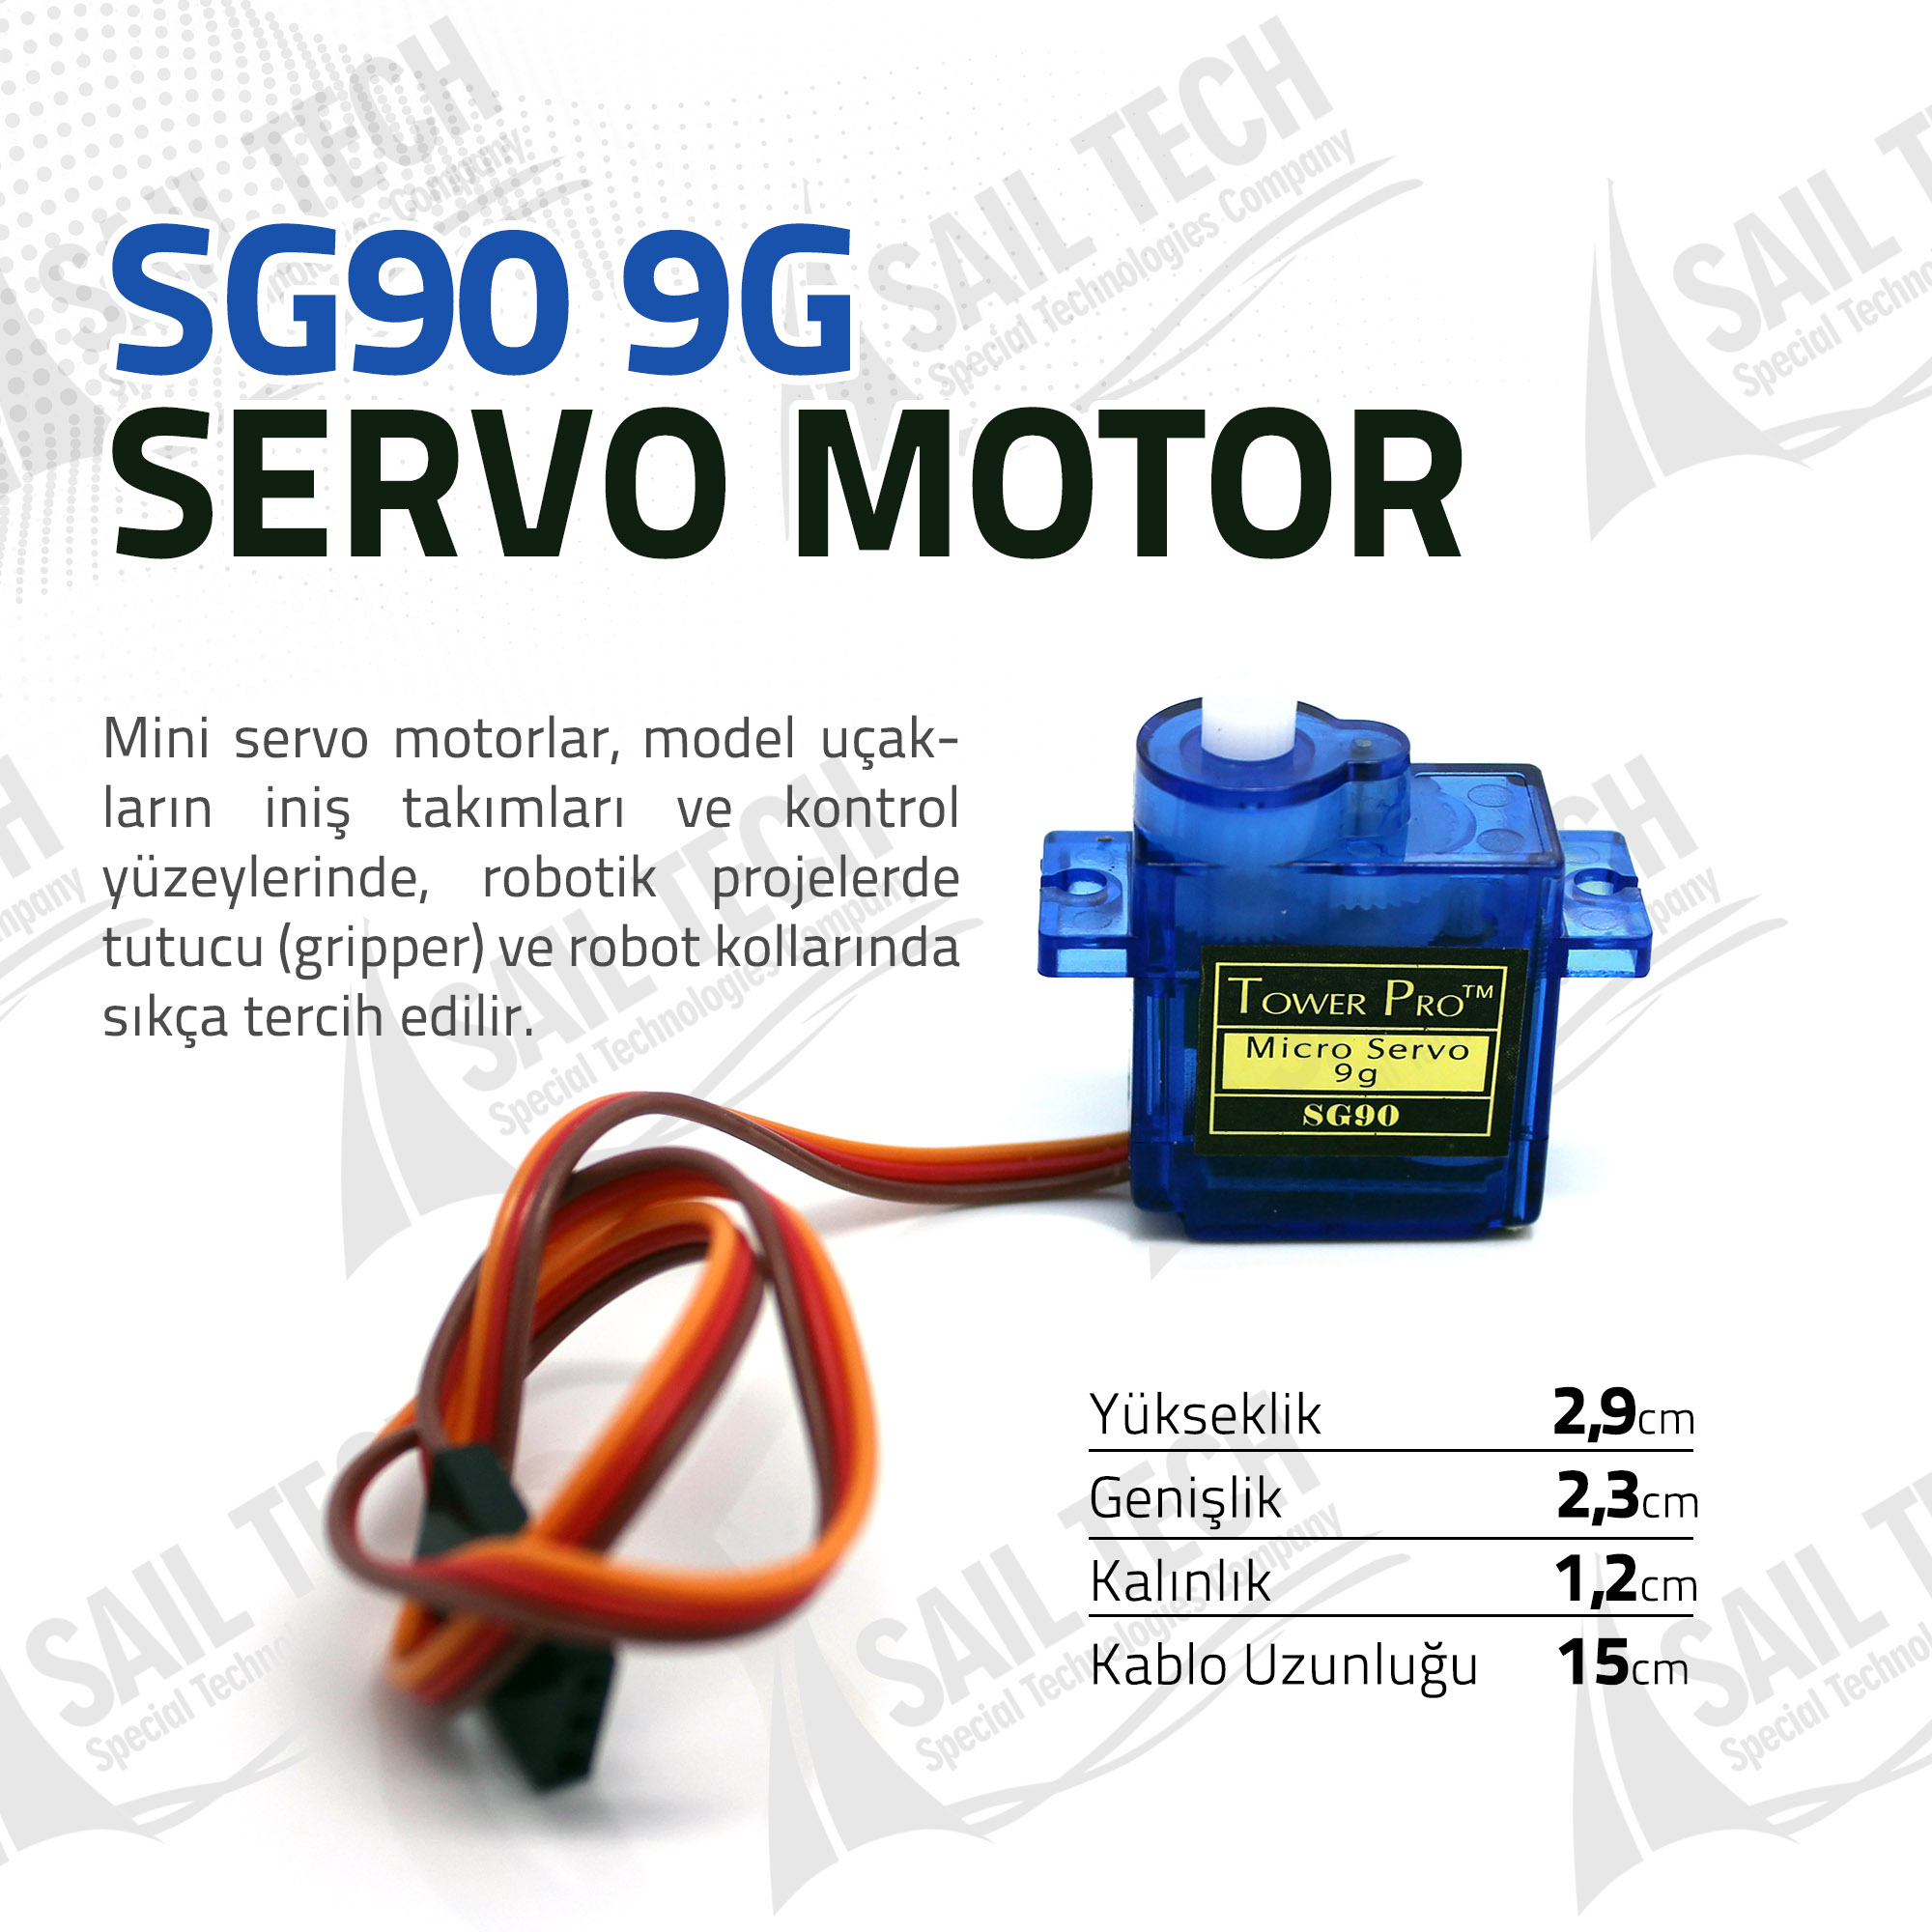 SG90 9G Servo Motor